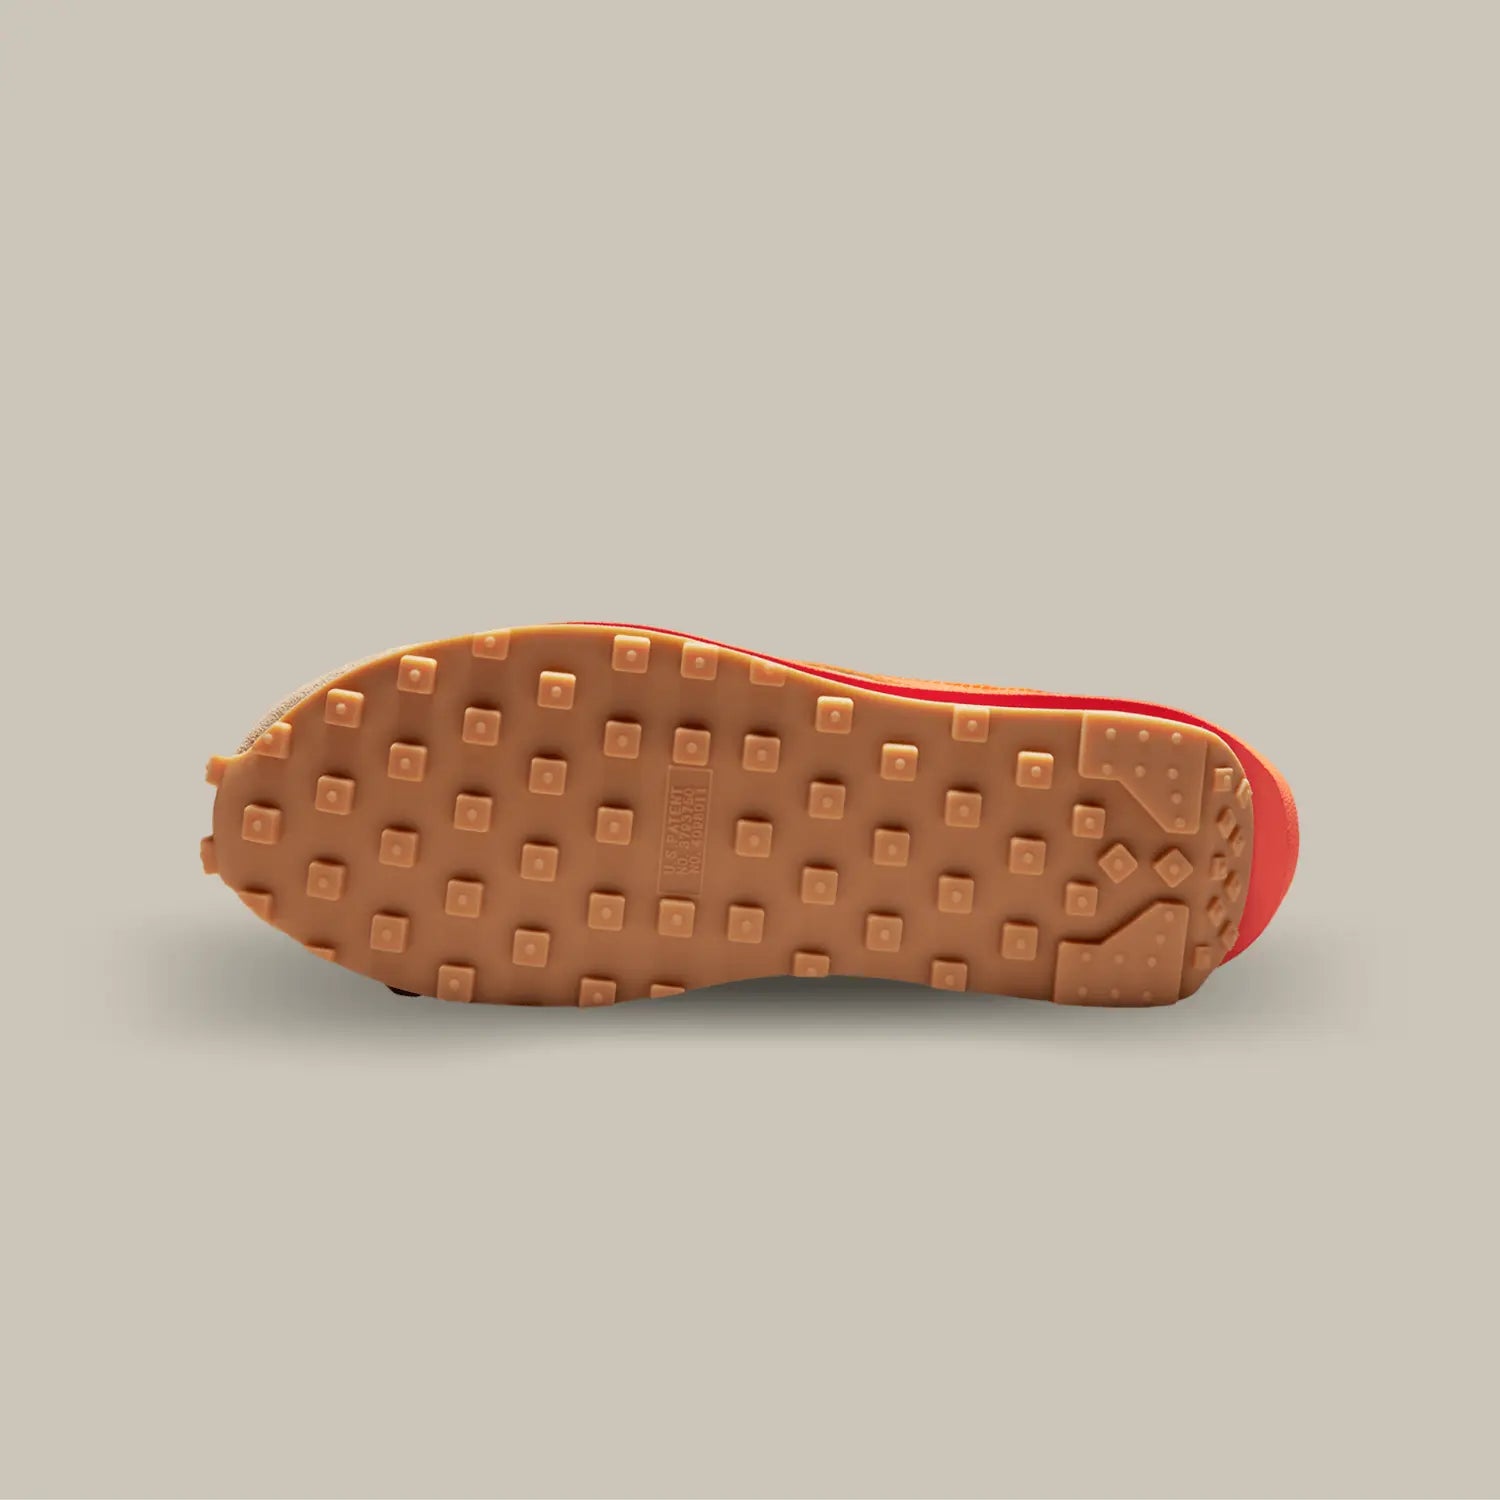 La semelle Semelle de couleur marron orangé de la Nike LD Waffle Sacai Clot Net Orange Blaze